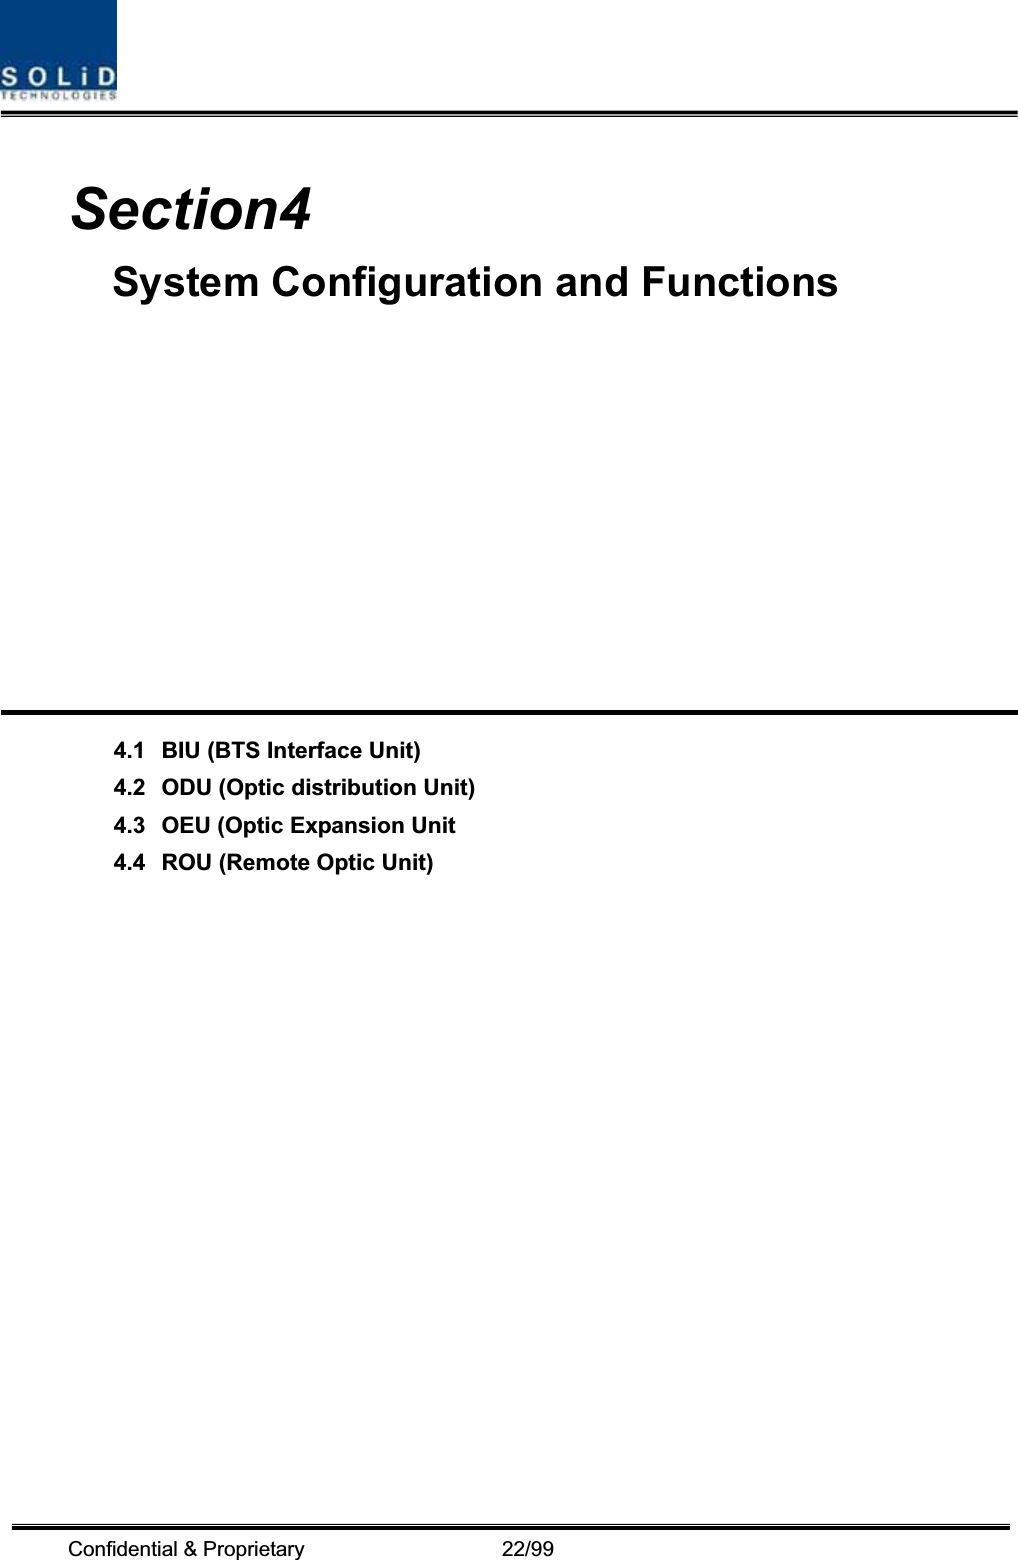 Confidential &amp; Proprietary                   22/99 Section4System Configuration and Functions 4.1 BIU (BTS Interface Unit)4.2 ODU (Optic distribution Unit)4.3 OEU (Optic Expansion Unit4.4 ROU (Remote Optic Unit)